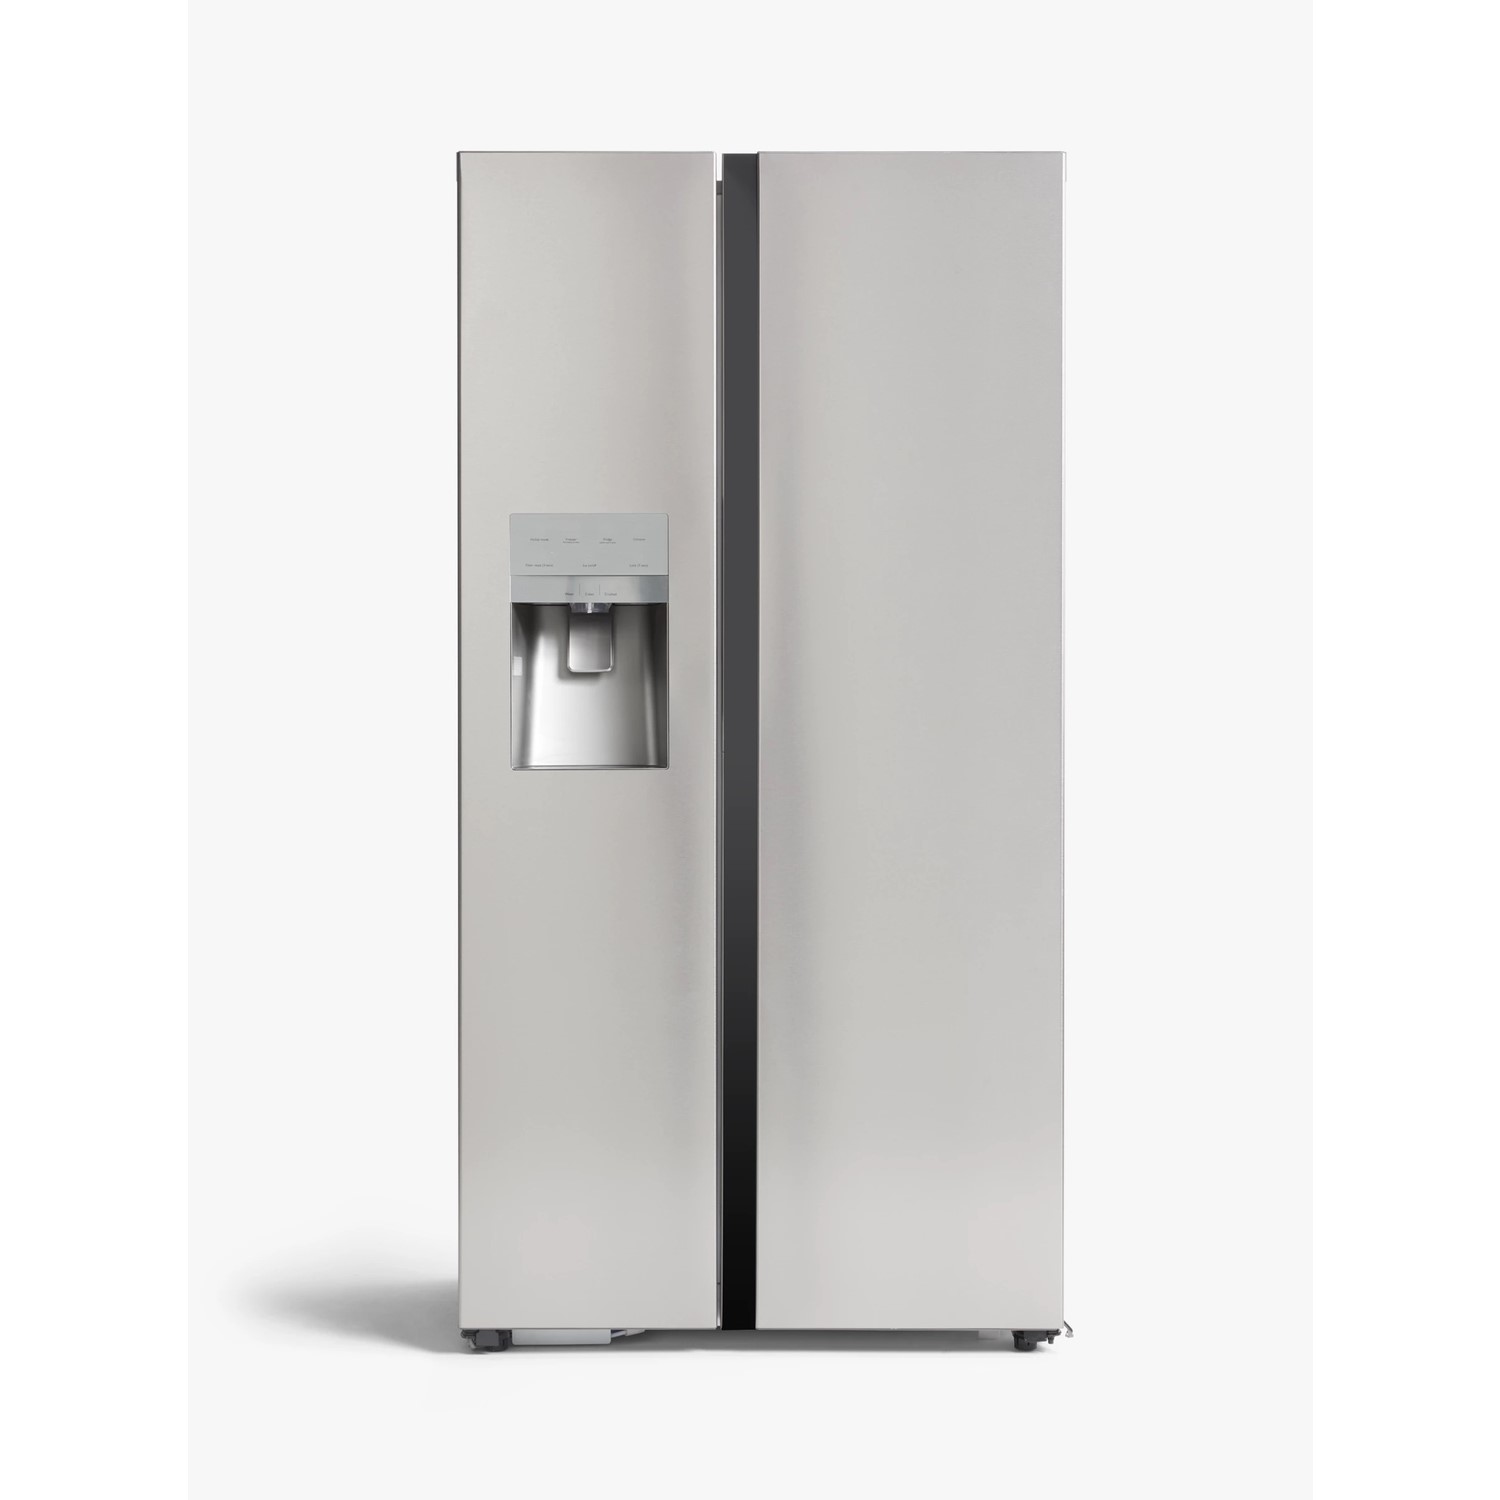 Refurbished Major Brand American-Style Freestanding 540 Litre 65/35 Fridge Freezer with Water/ Ice D